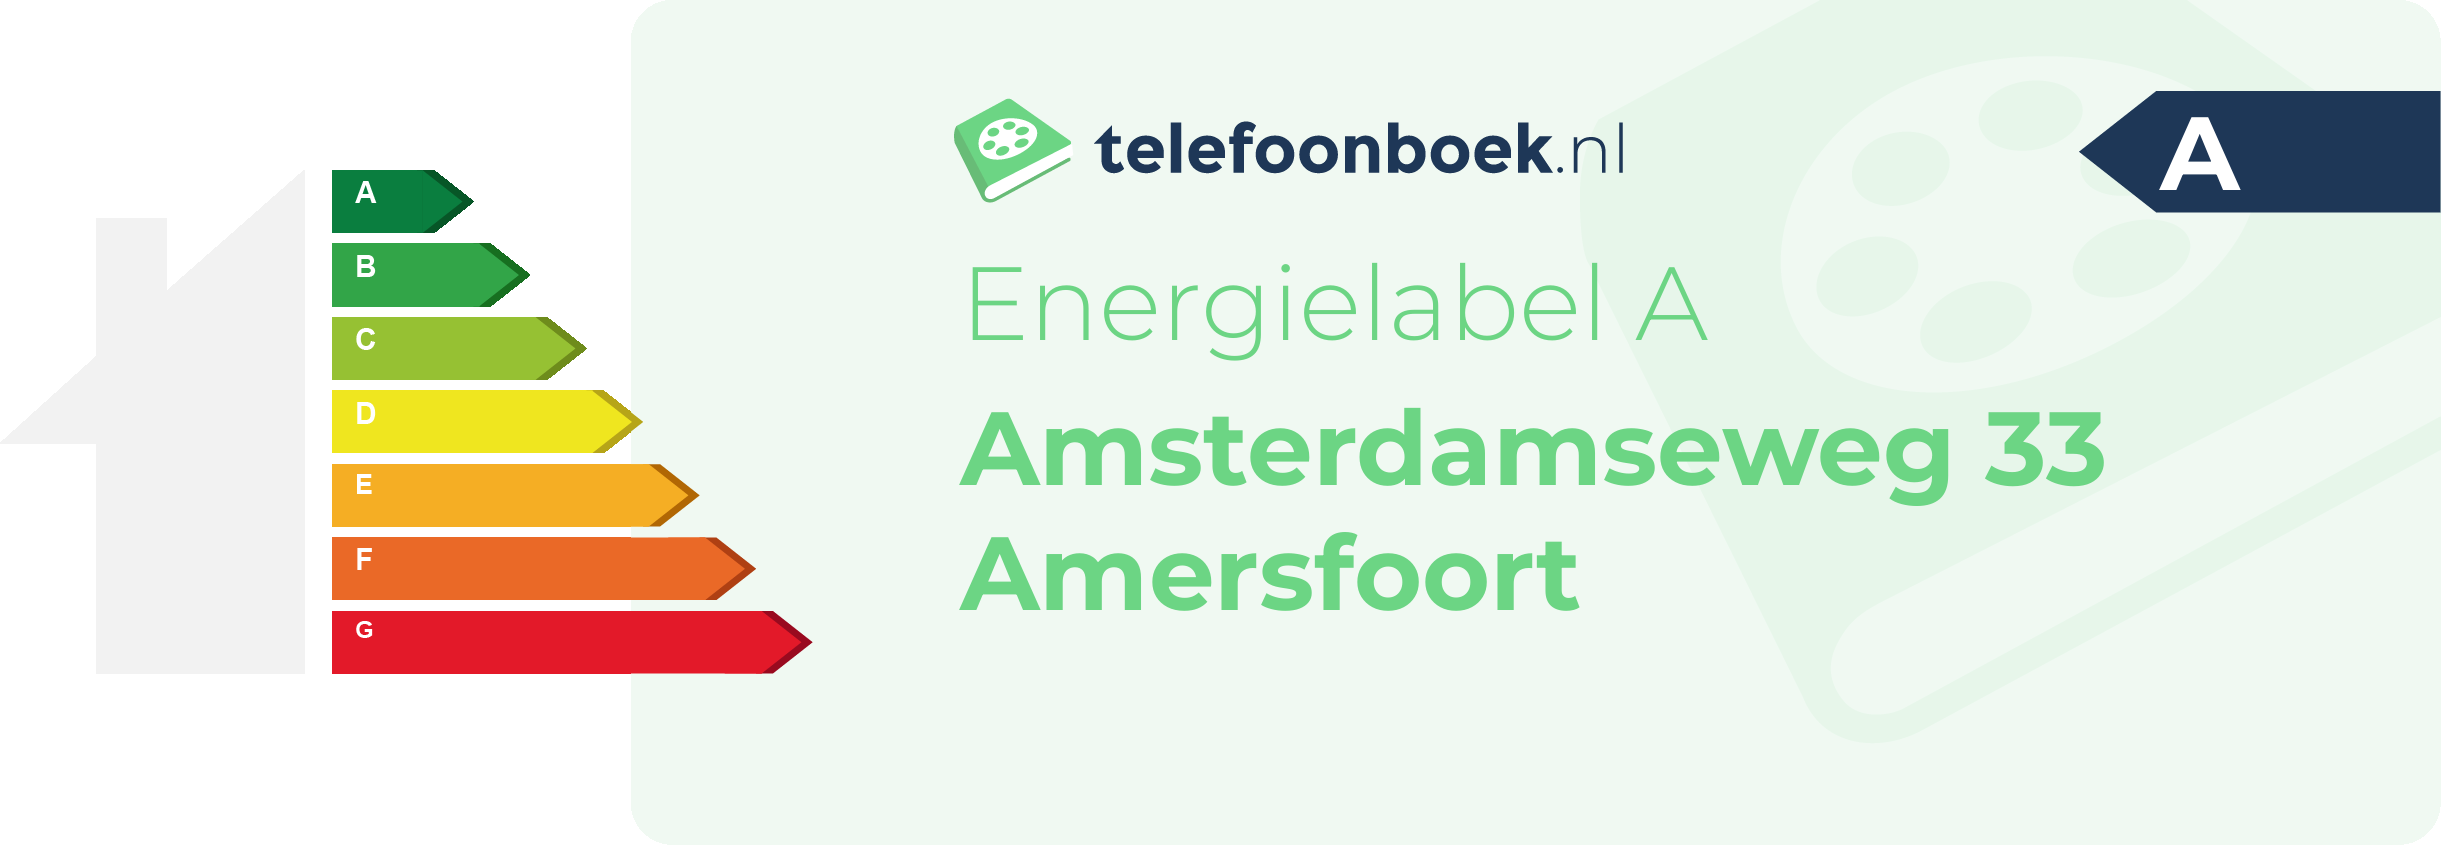 Energielabel Amsterdamseweg 33 Amersfoort